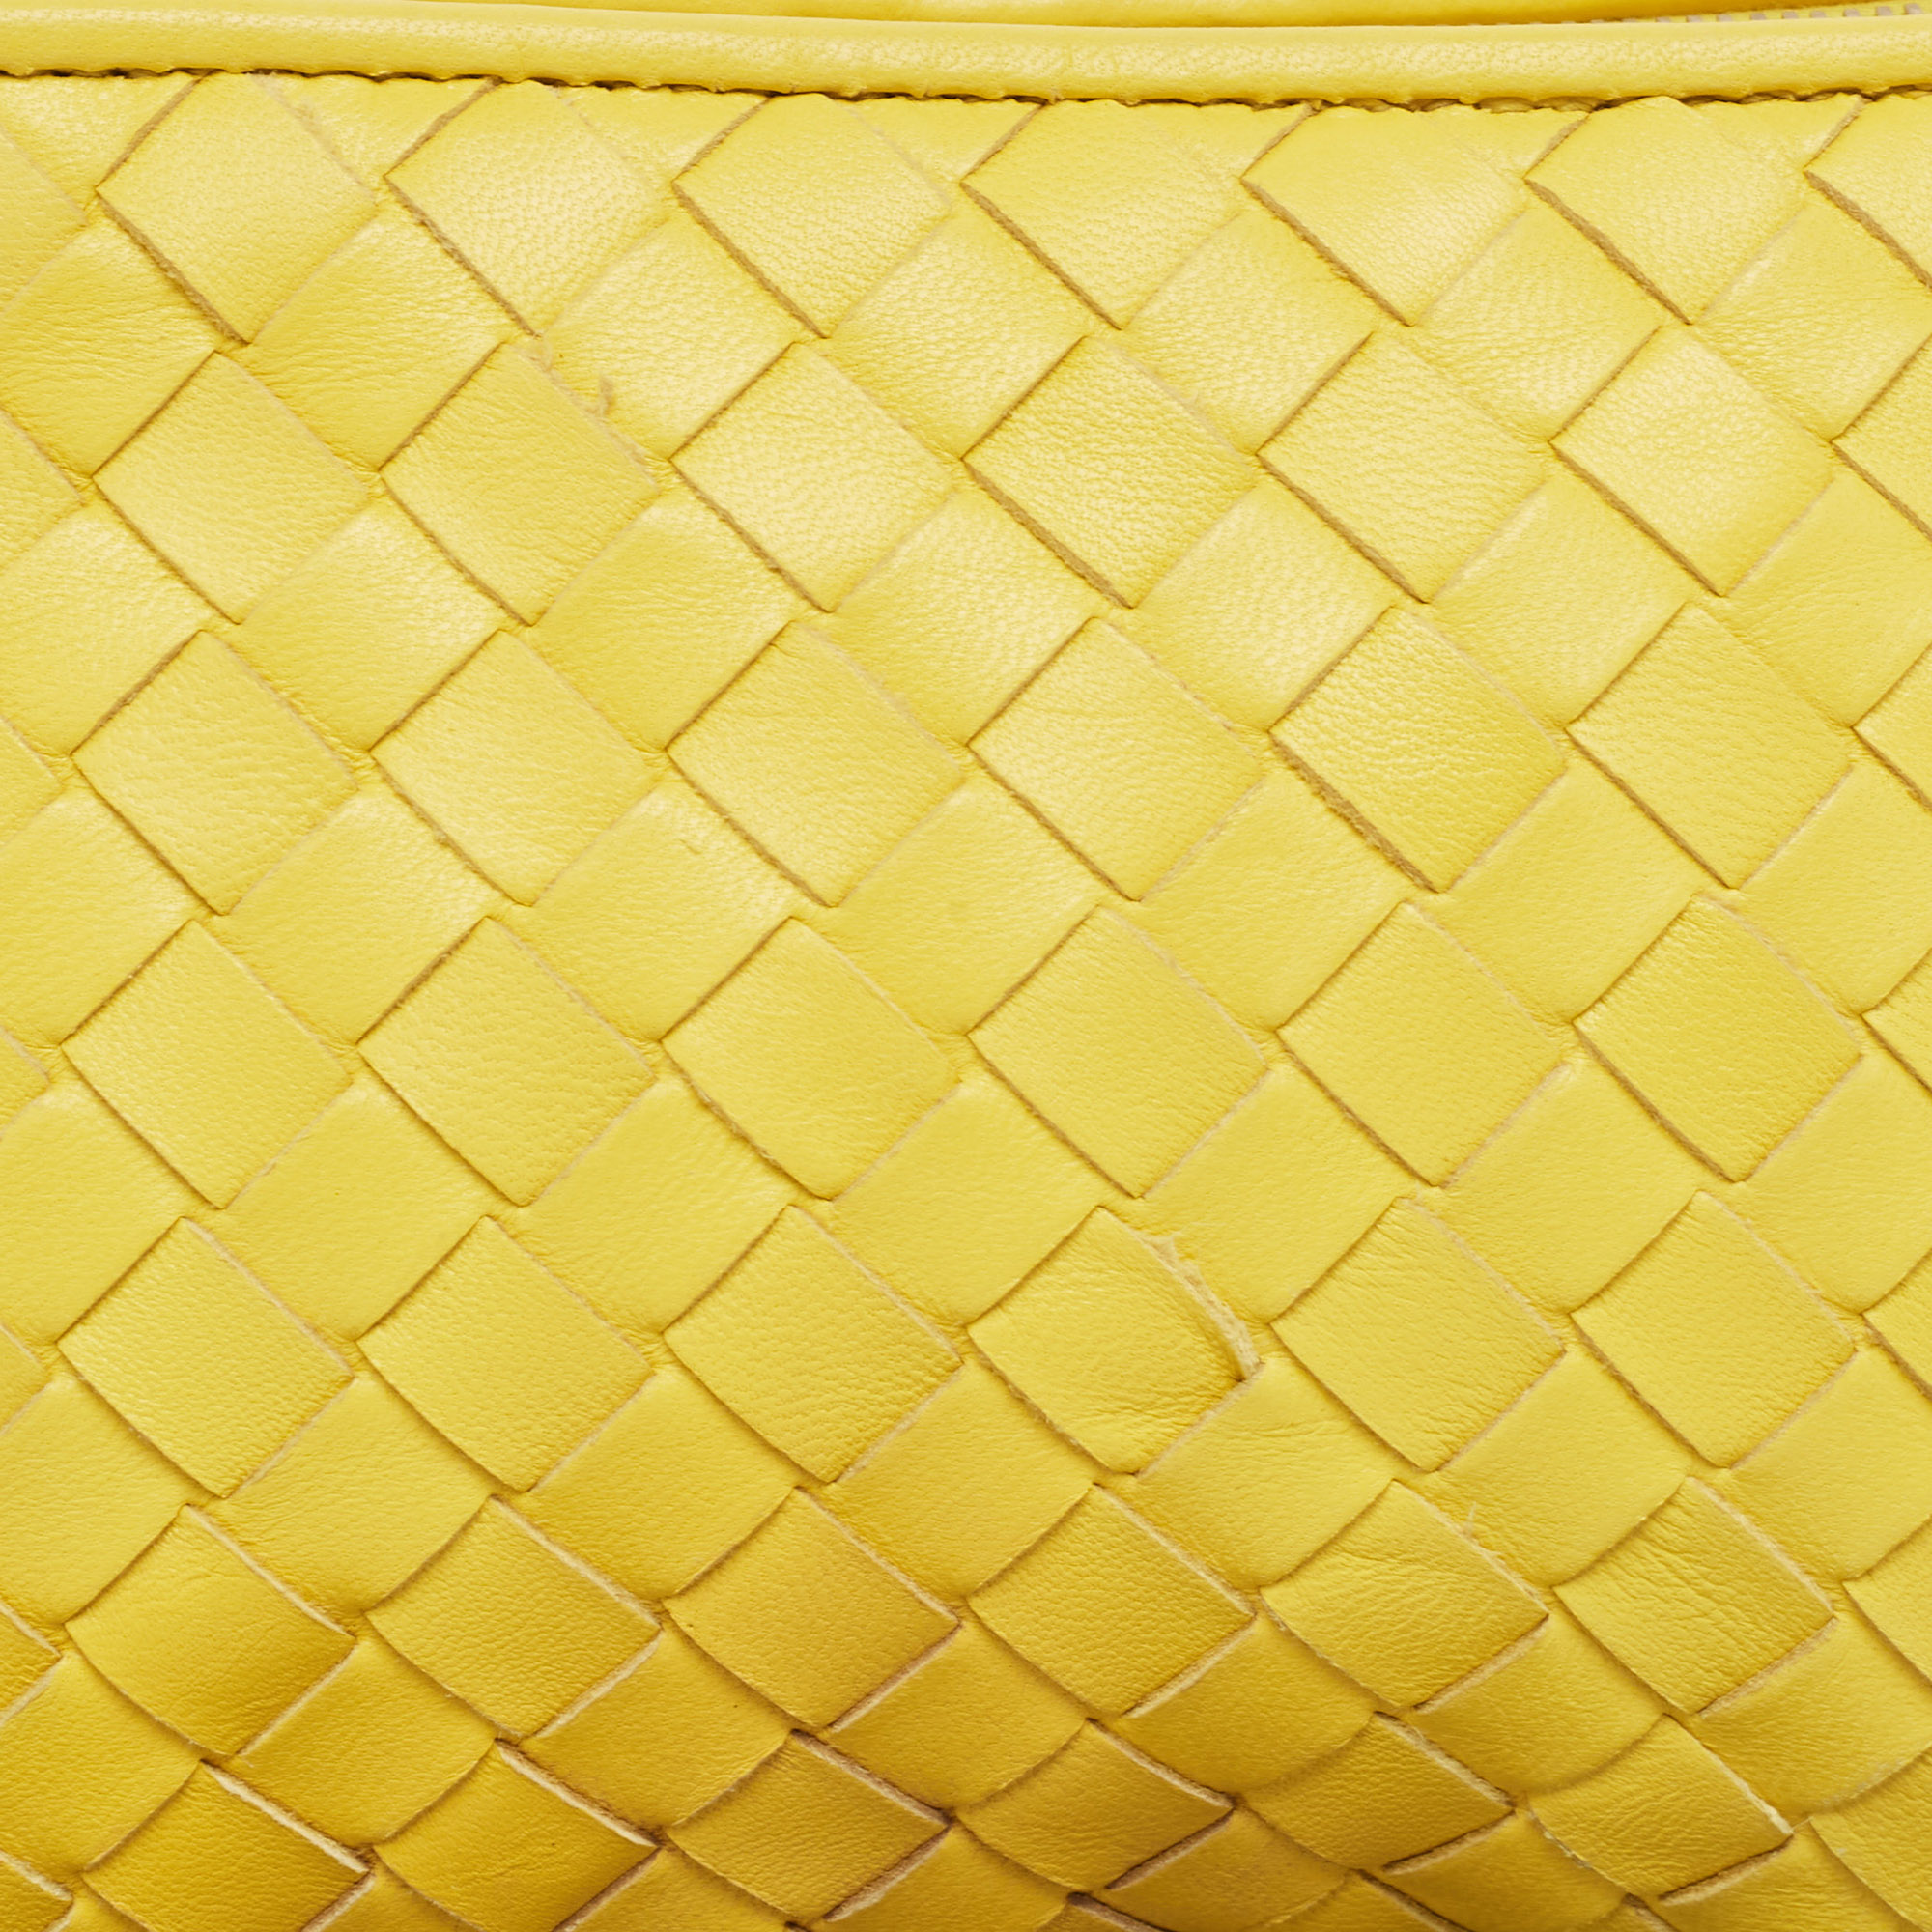 Bottega Veneta Yellow Leather Zip Pouch